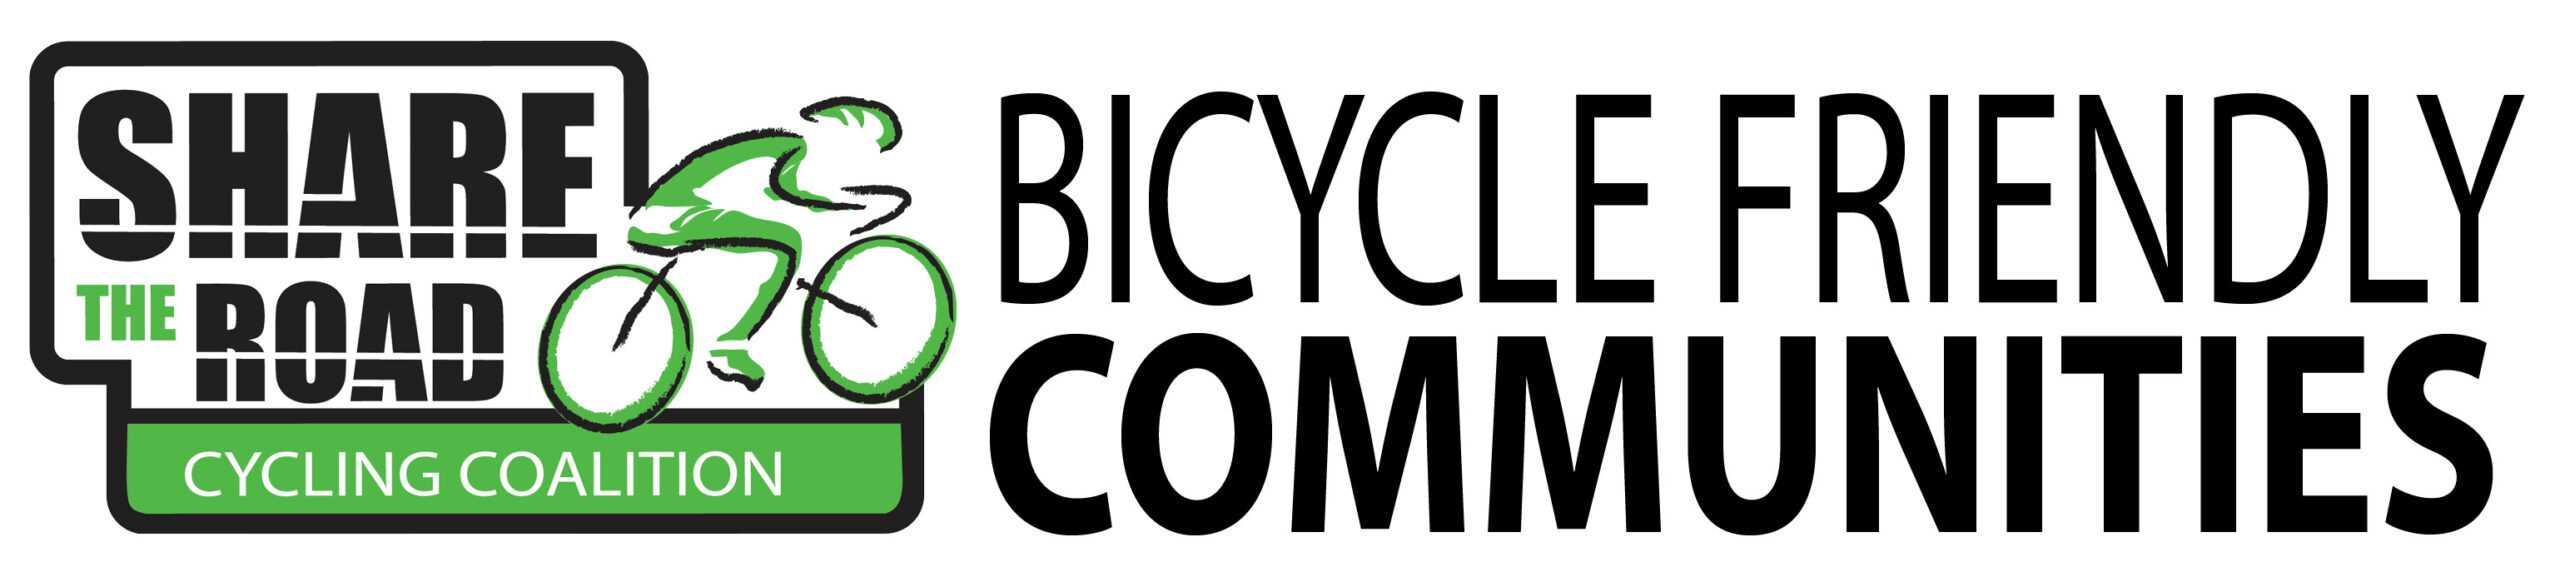 Bicycle friendly communities logo